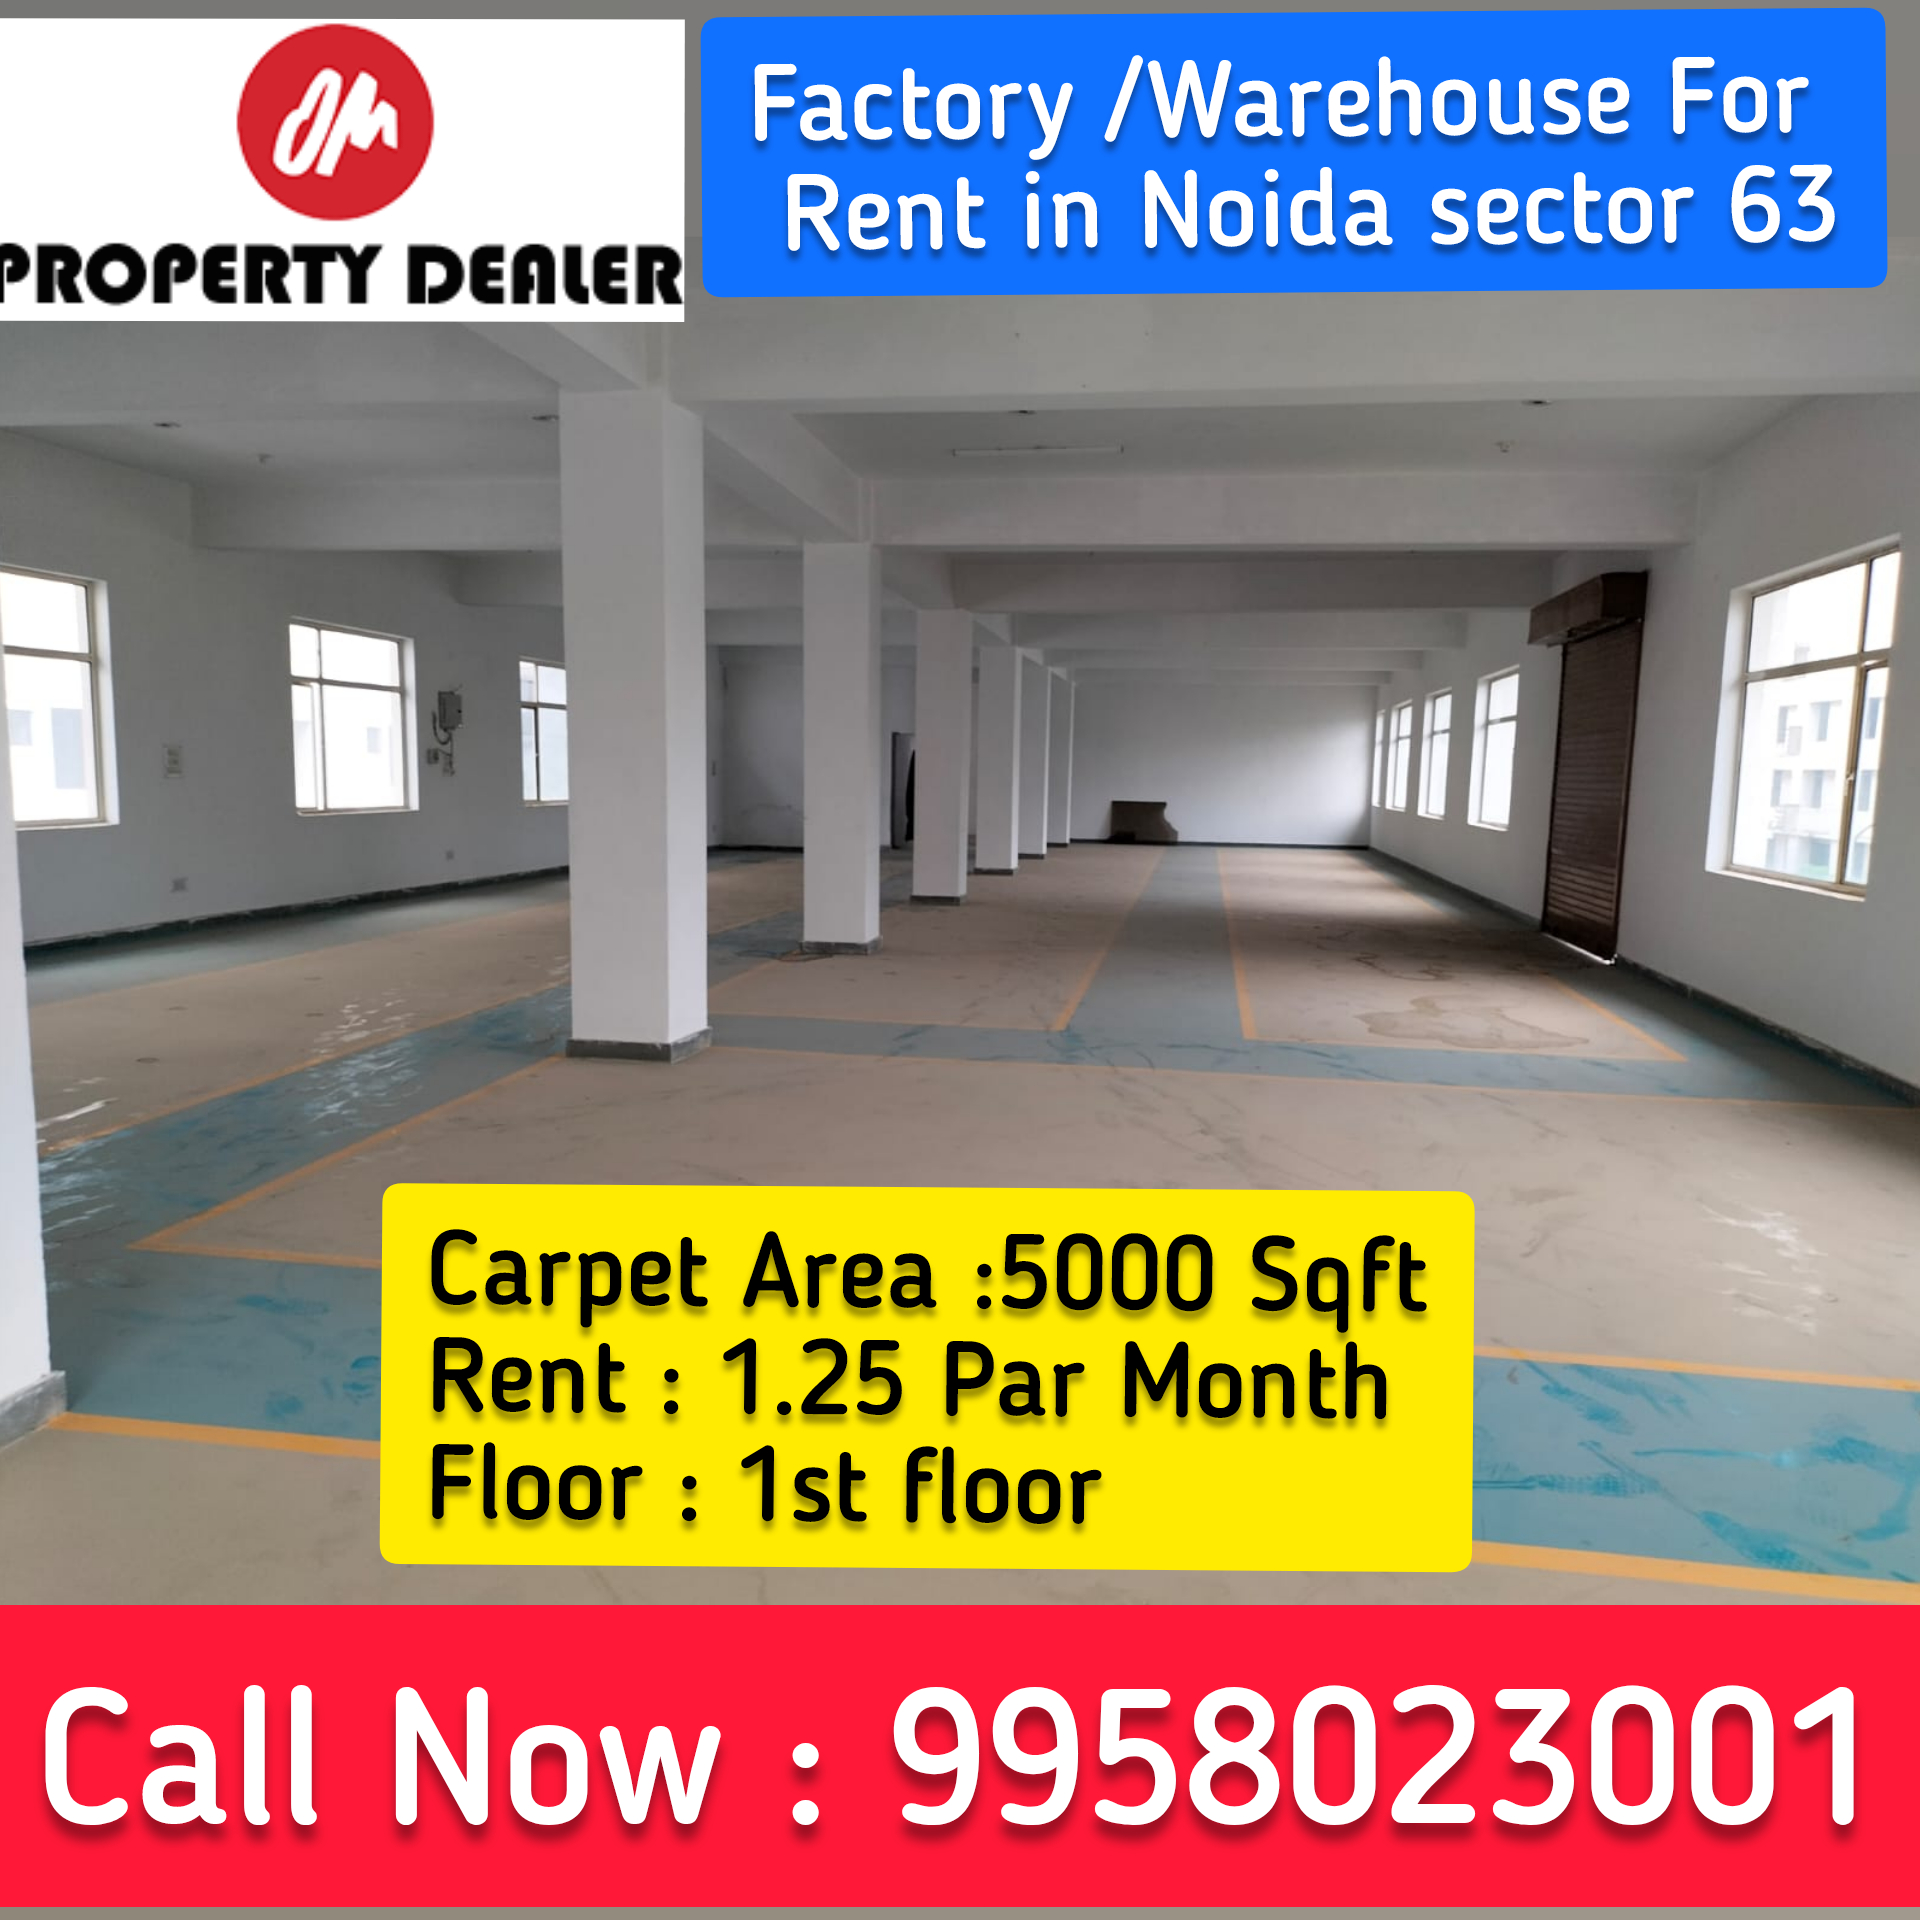 Warehouse for rent in Noida sector 63 Noida 